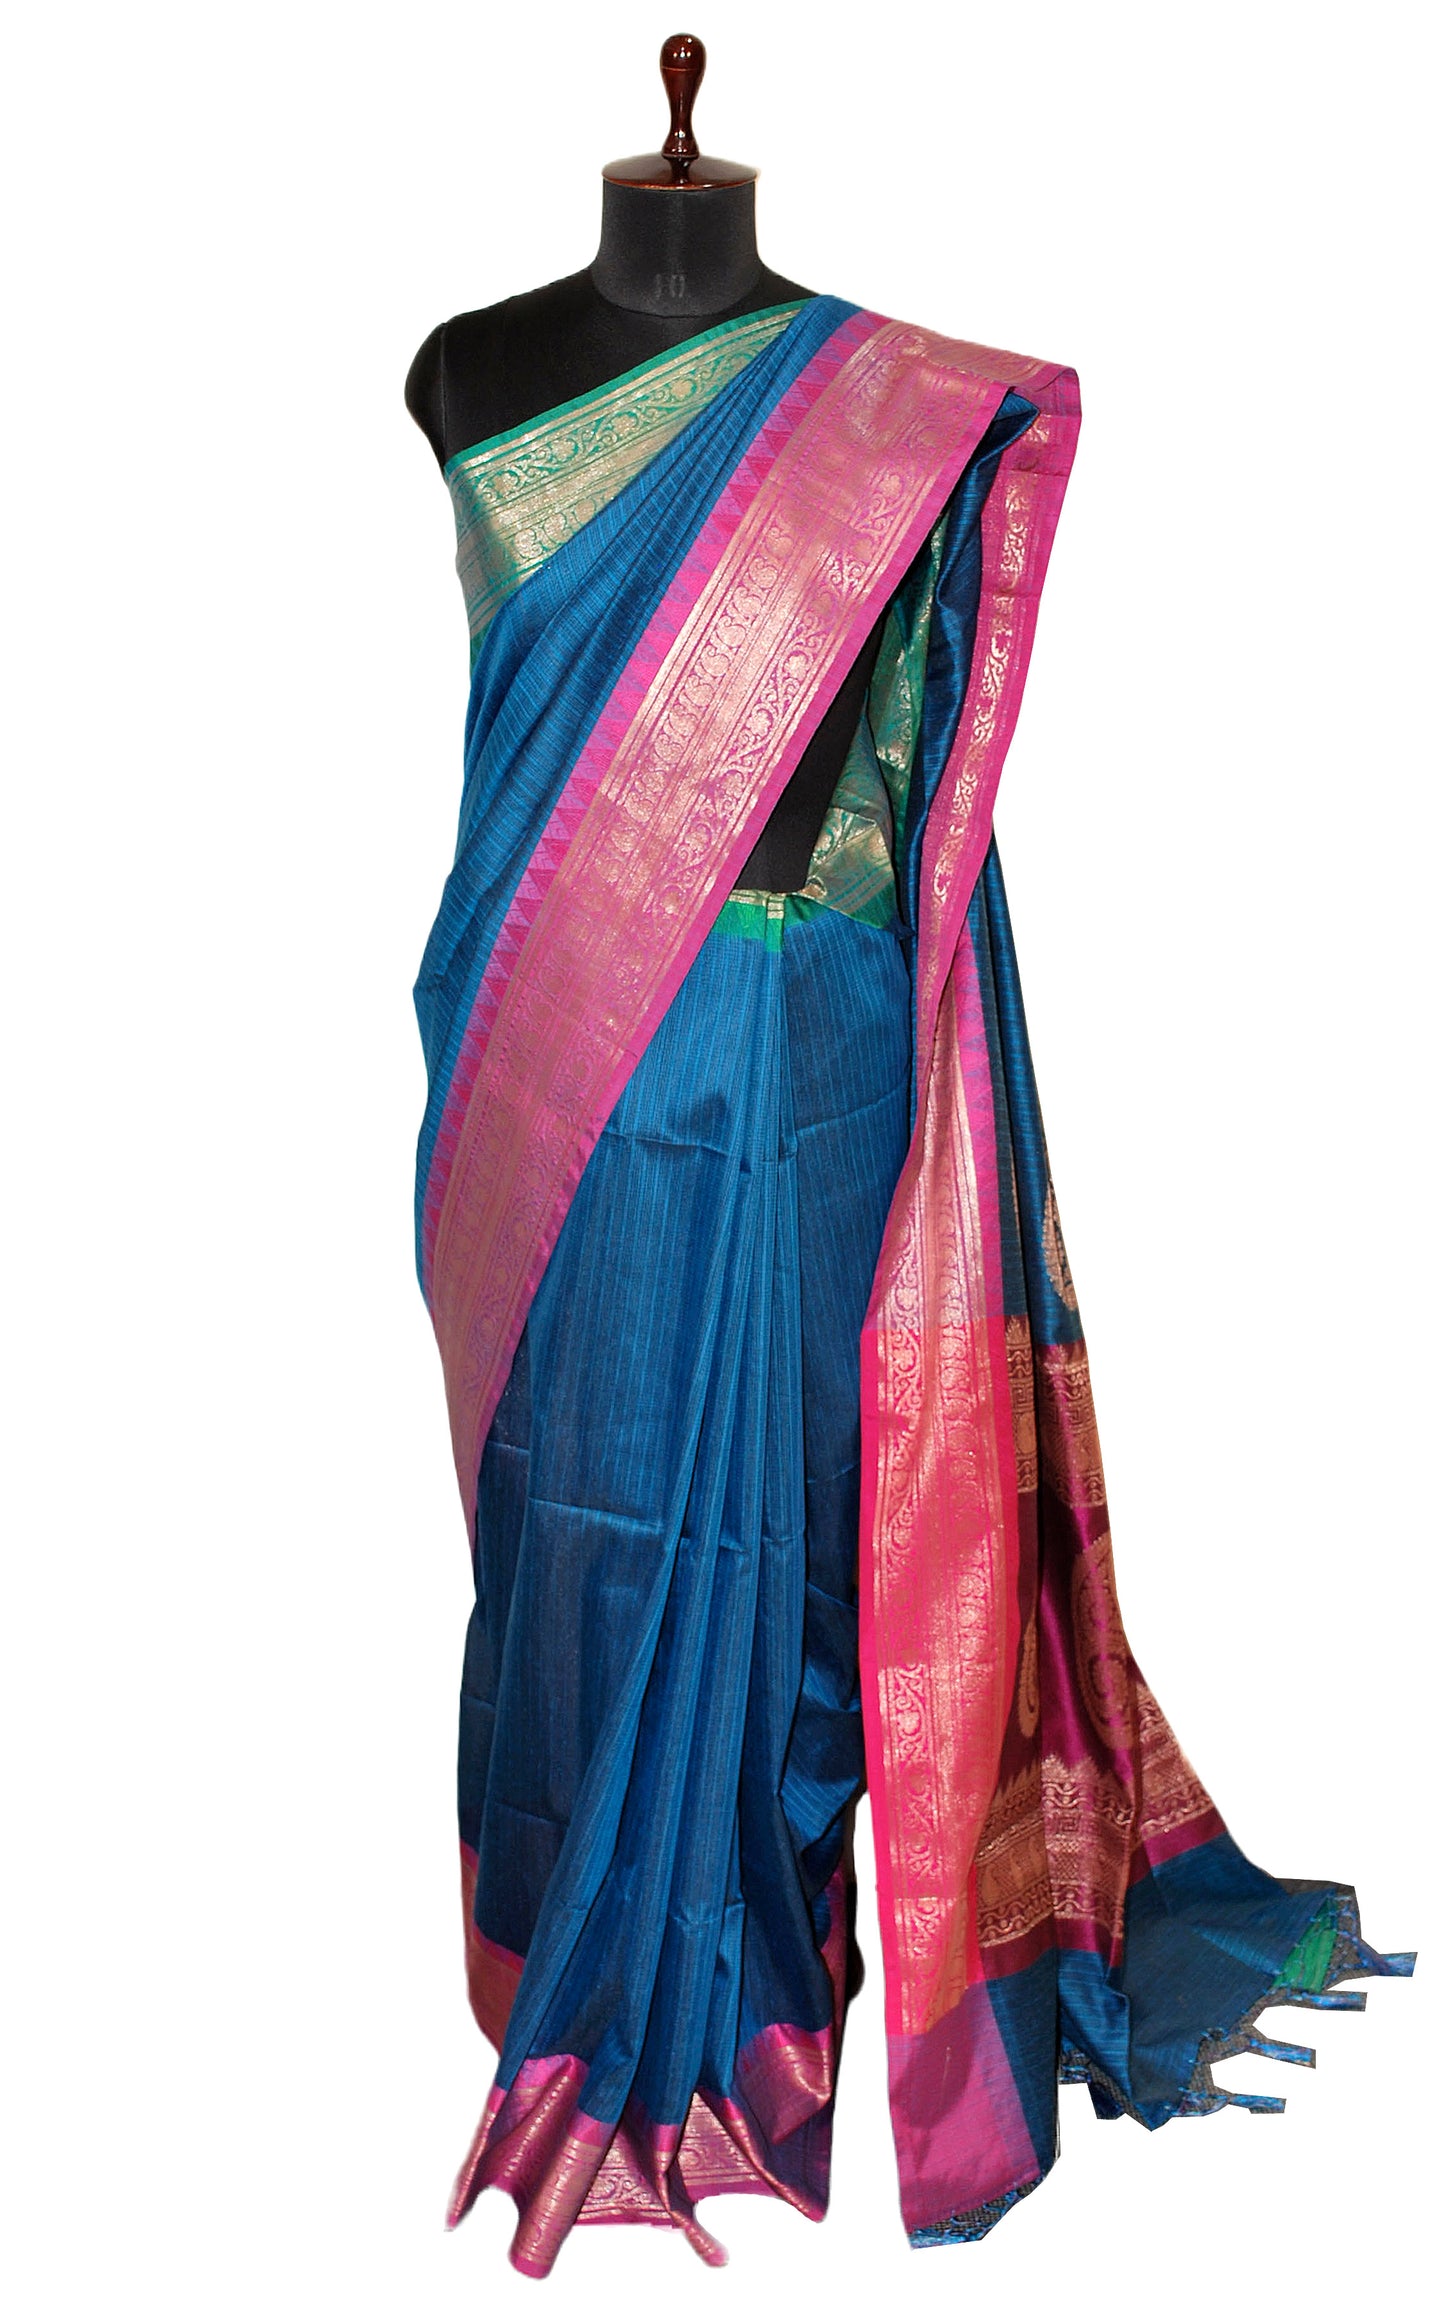 Traditional Ganga Jamuna Border Cotton Kota Checks Gadwal Saree with Rich Pallu in Denim Blue, Hot Pink and Green